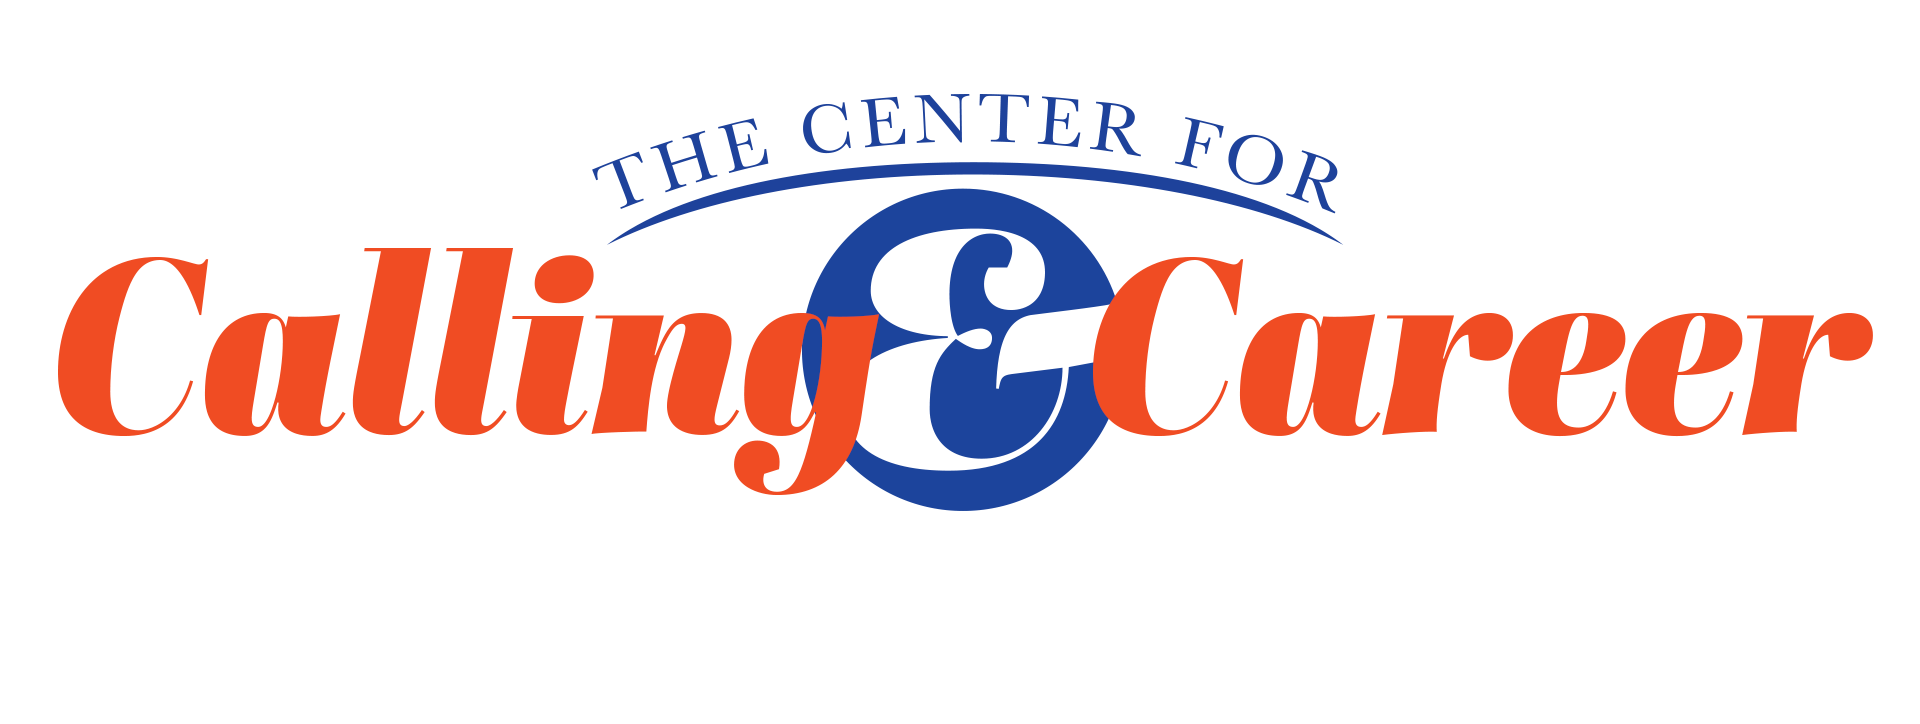 Calling-and-Career-logo